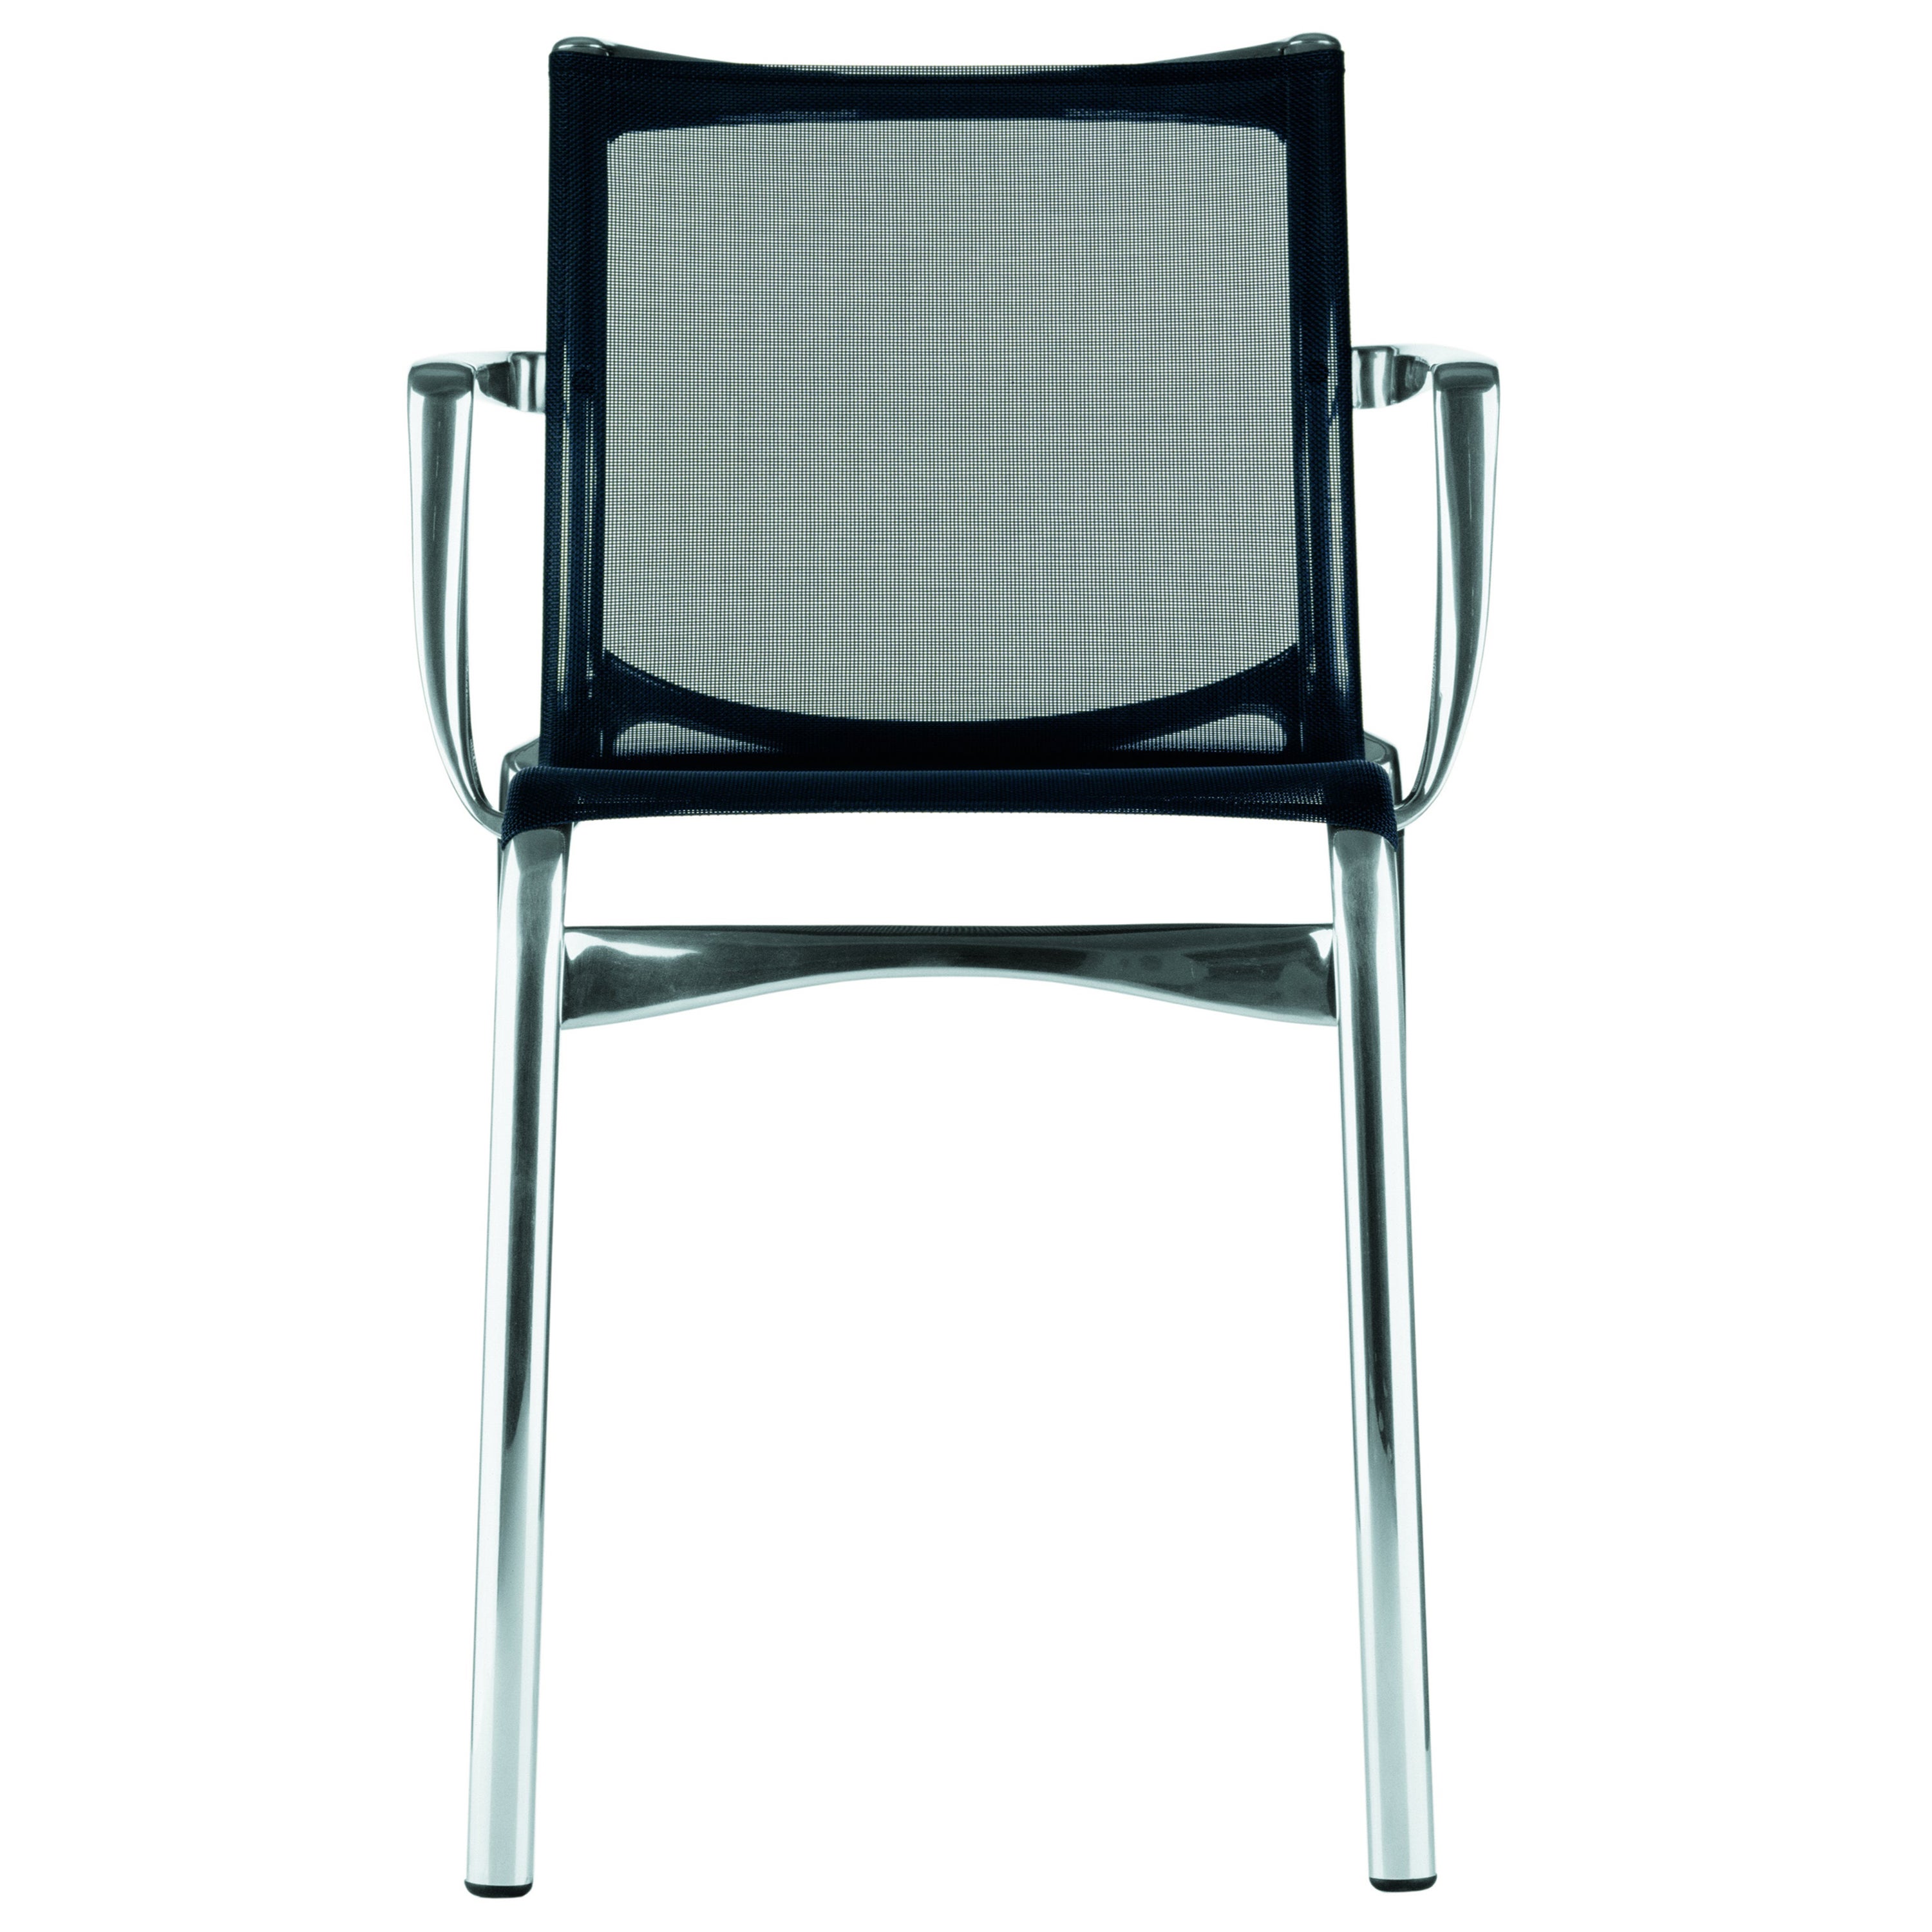 Alias 417 Highframe 40 Chair in Black Mesh Seat with Chromed Aluminium Frame